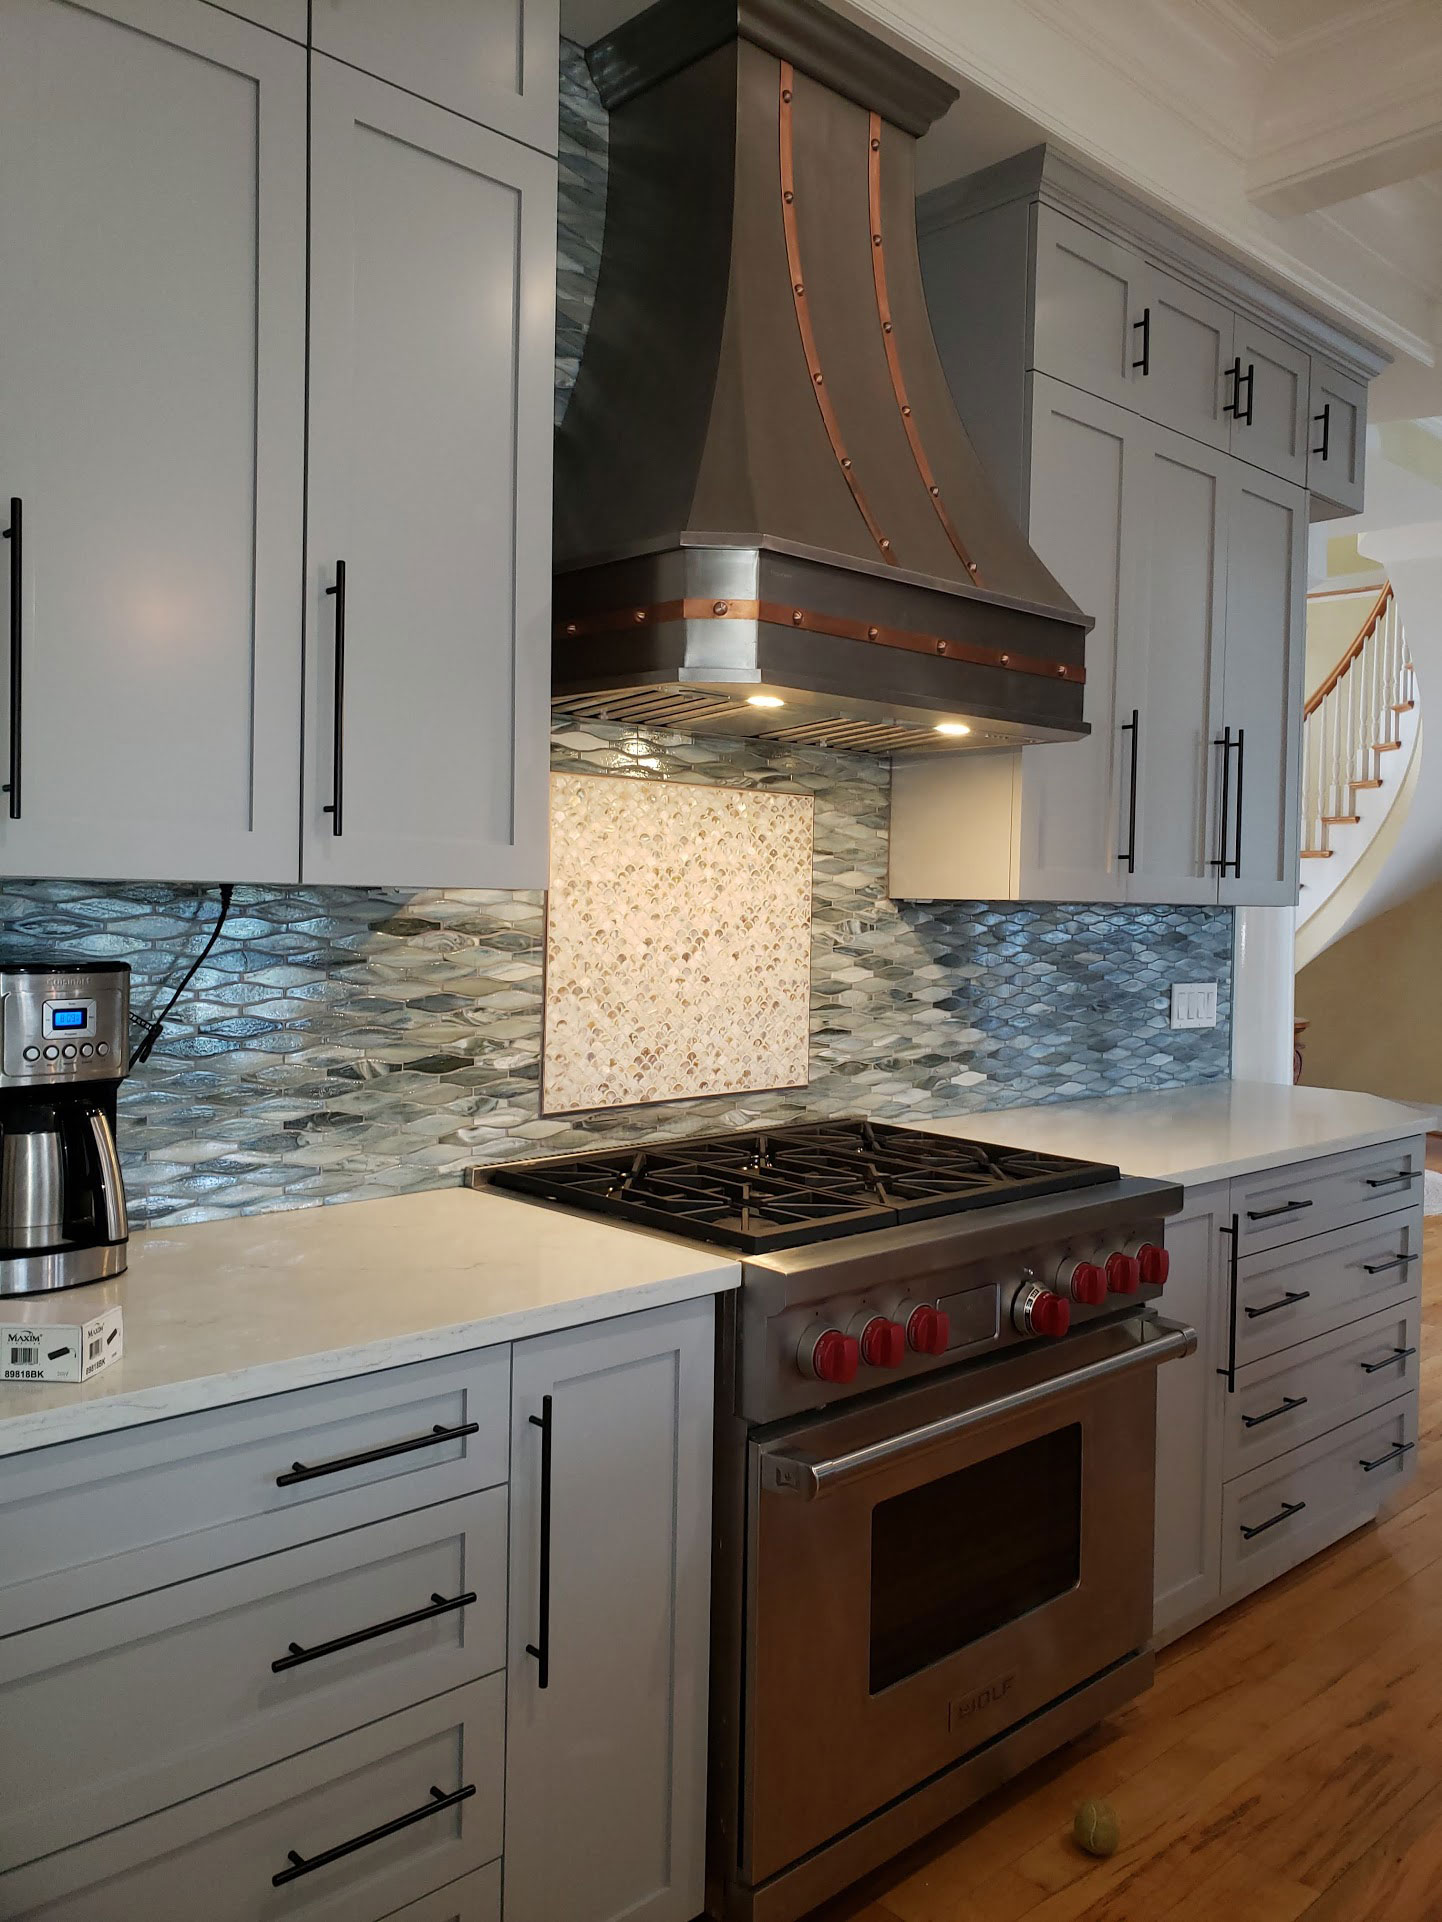 Charming cottage kitchen with creative kitchen sink idea, black kitchen cabinets marble kitchen countertops and backsplash